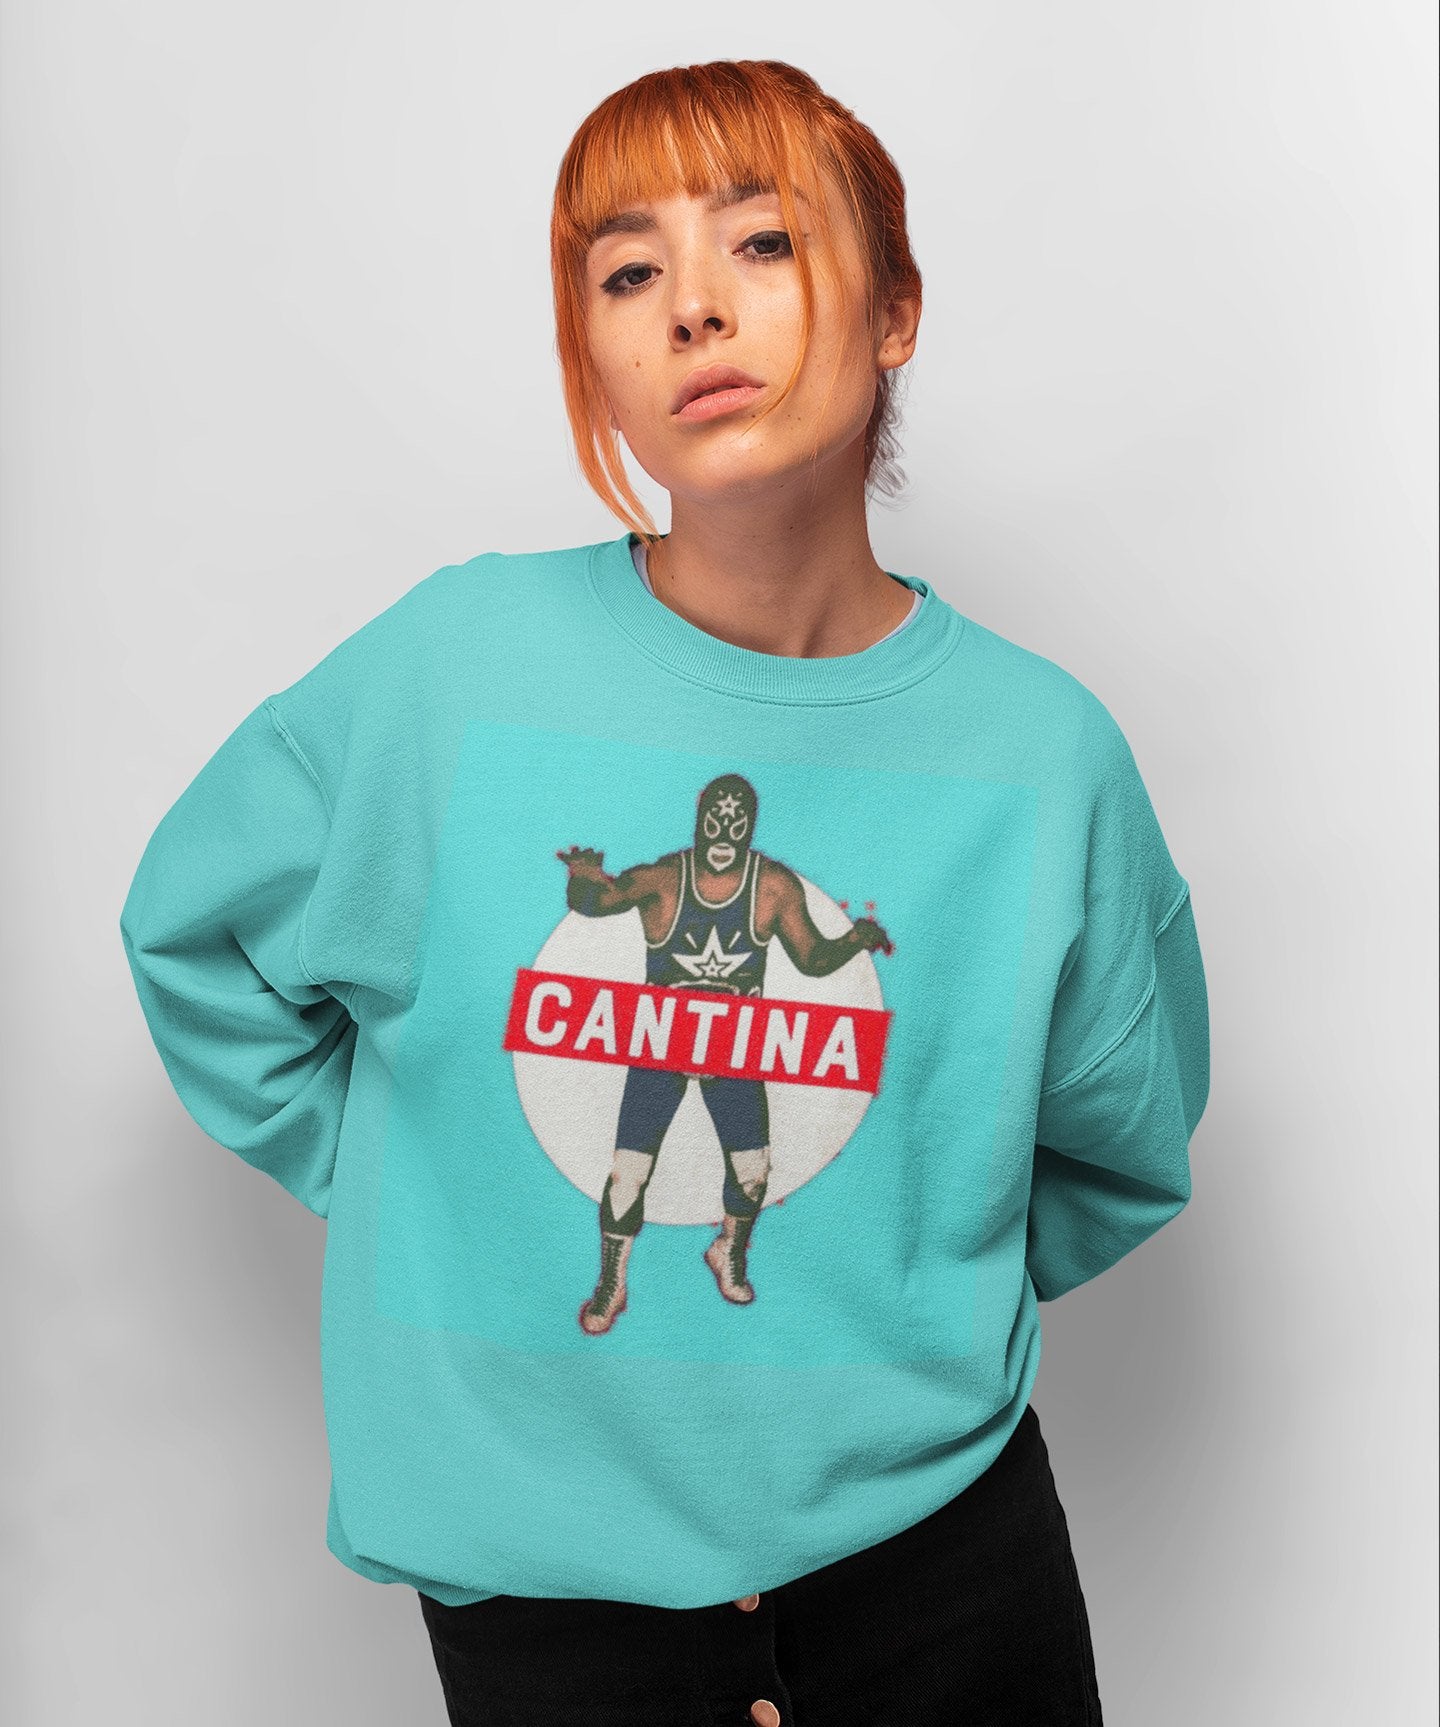 Cantina Staff sweatshirt